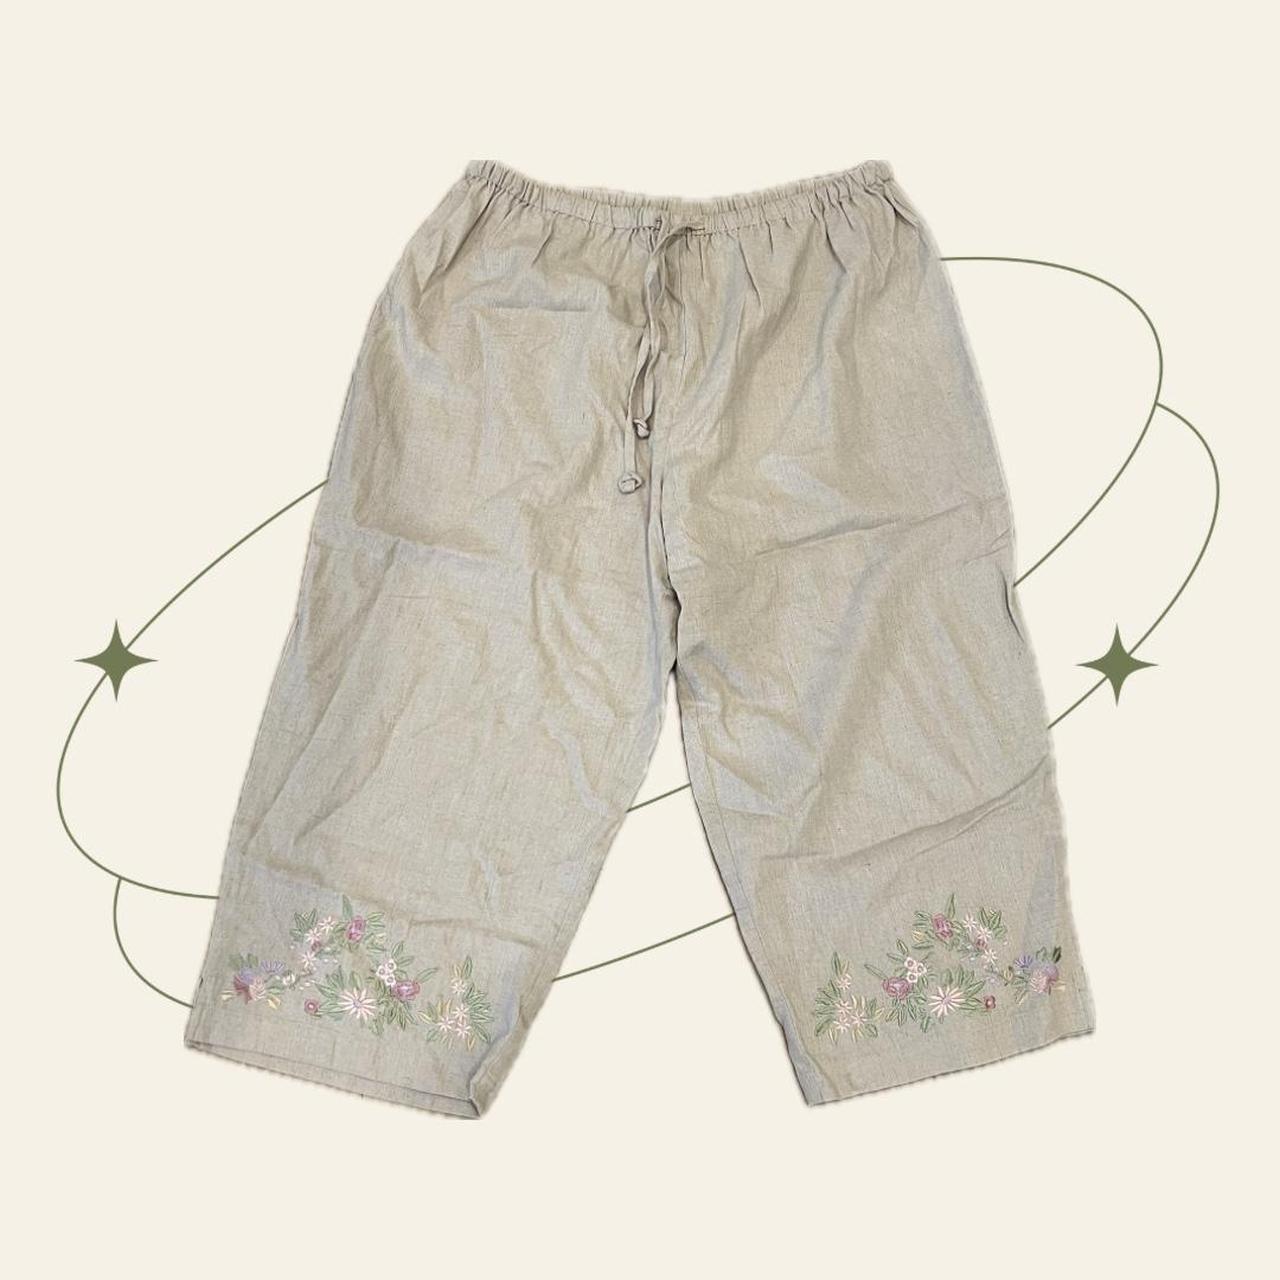 Vanity women's 9/14 stretch Capri pants This item - Depop